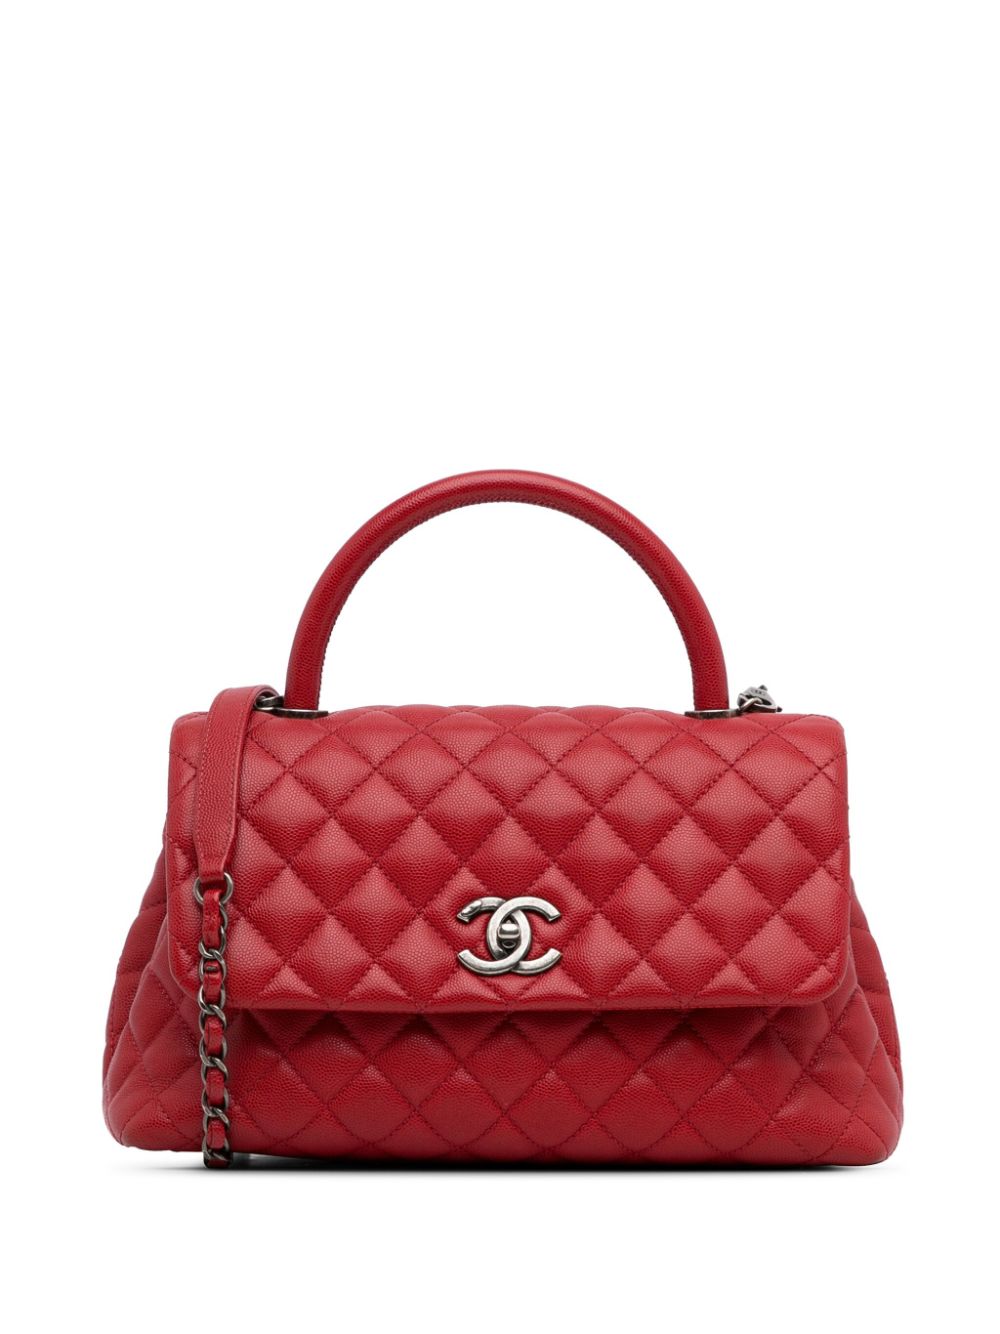 Pre-owned Chanel 2016-2017 Medium Caviar Coco Top Handle Bag Satchel In Red